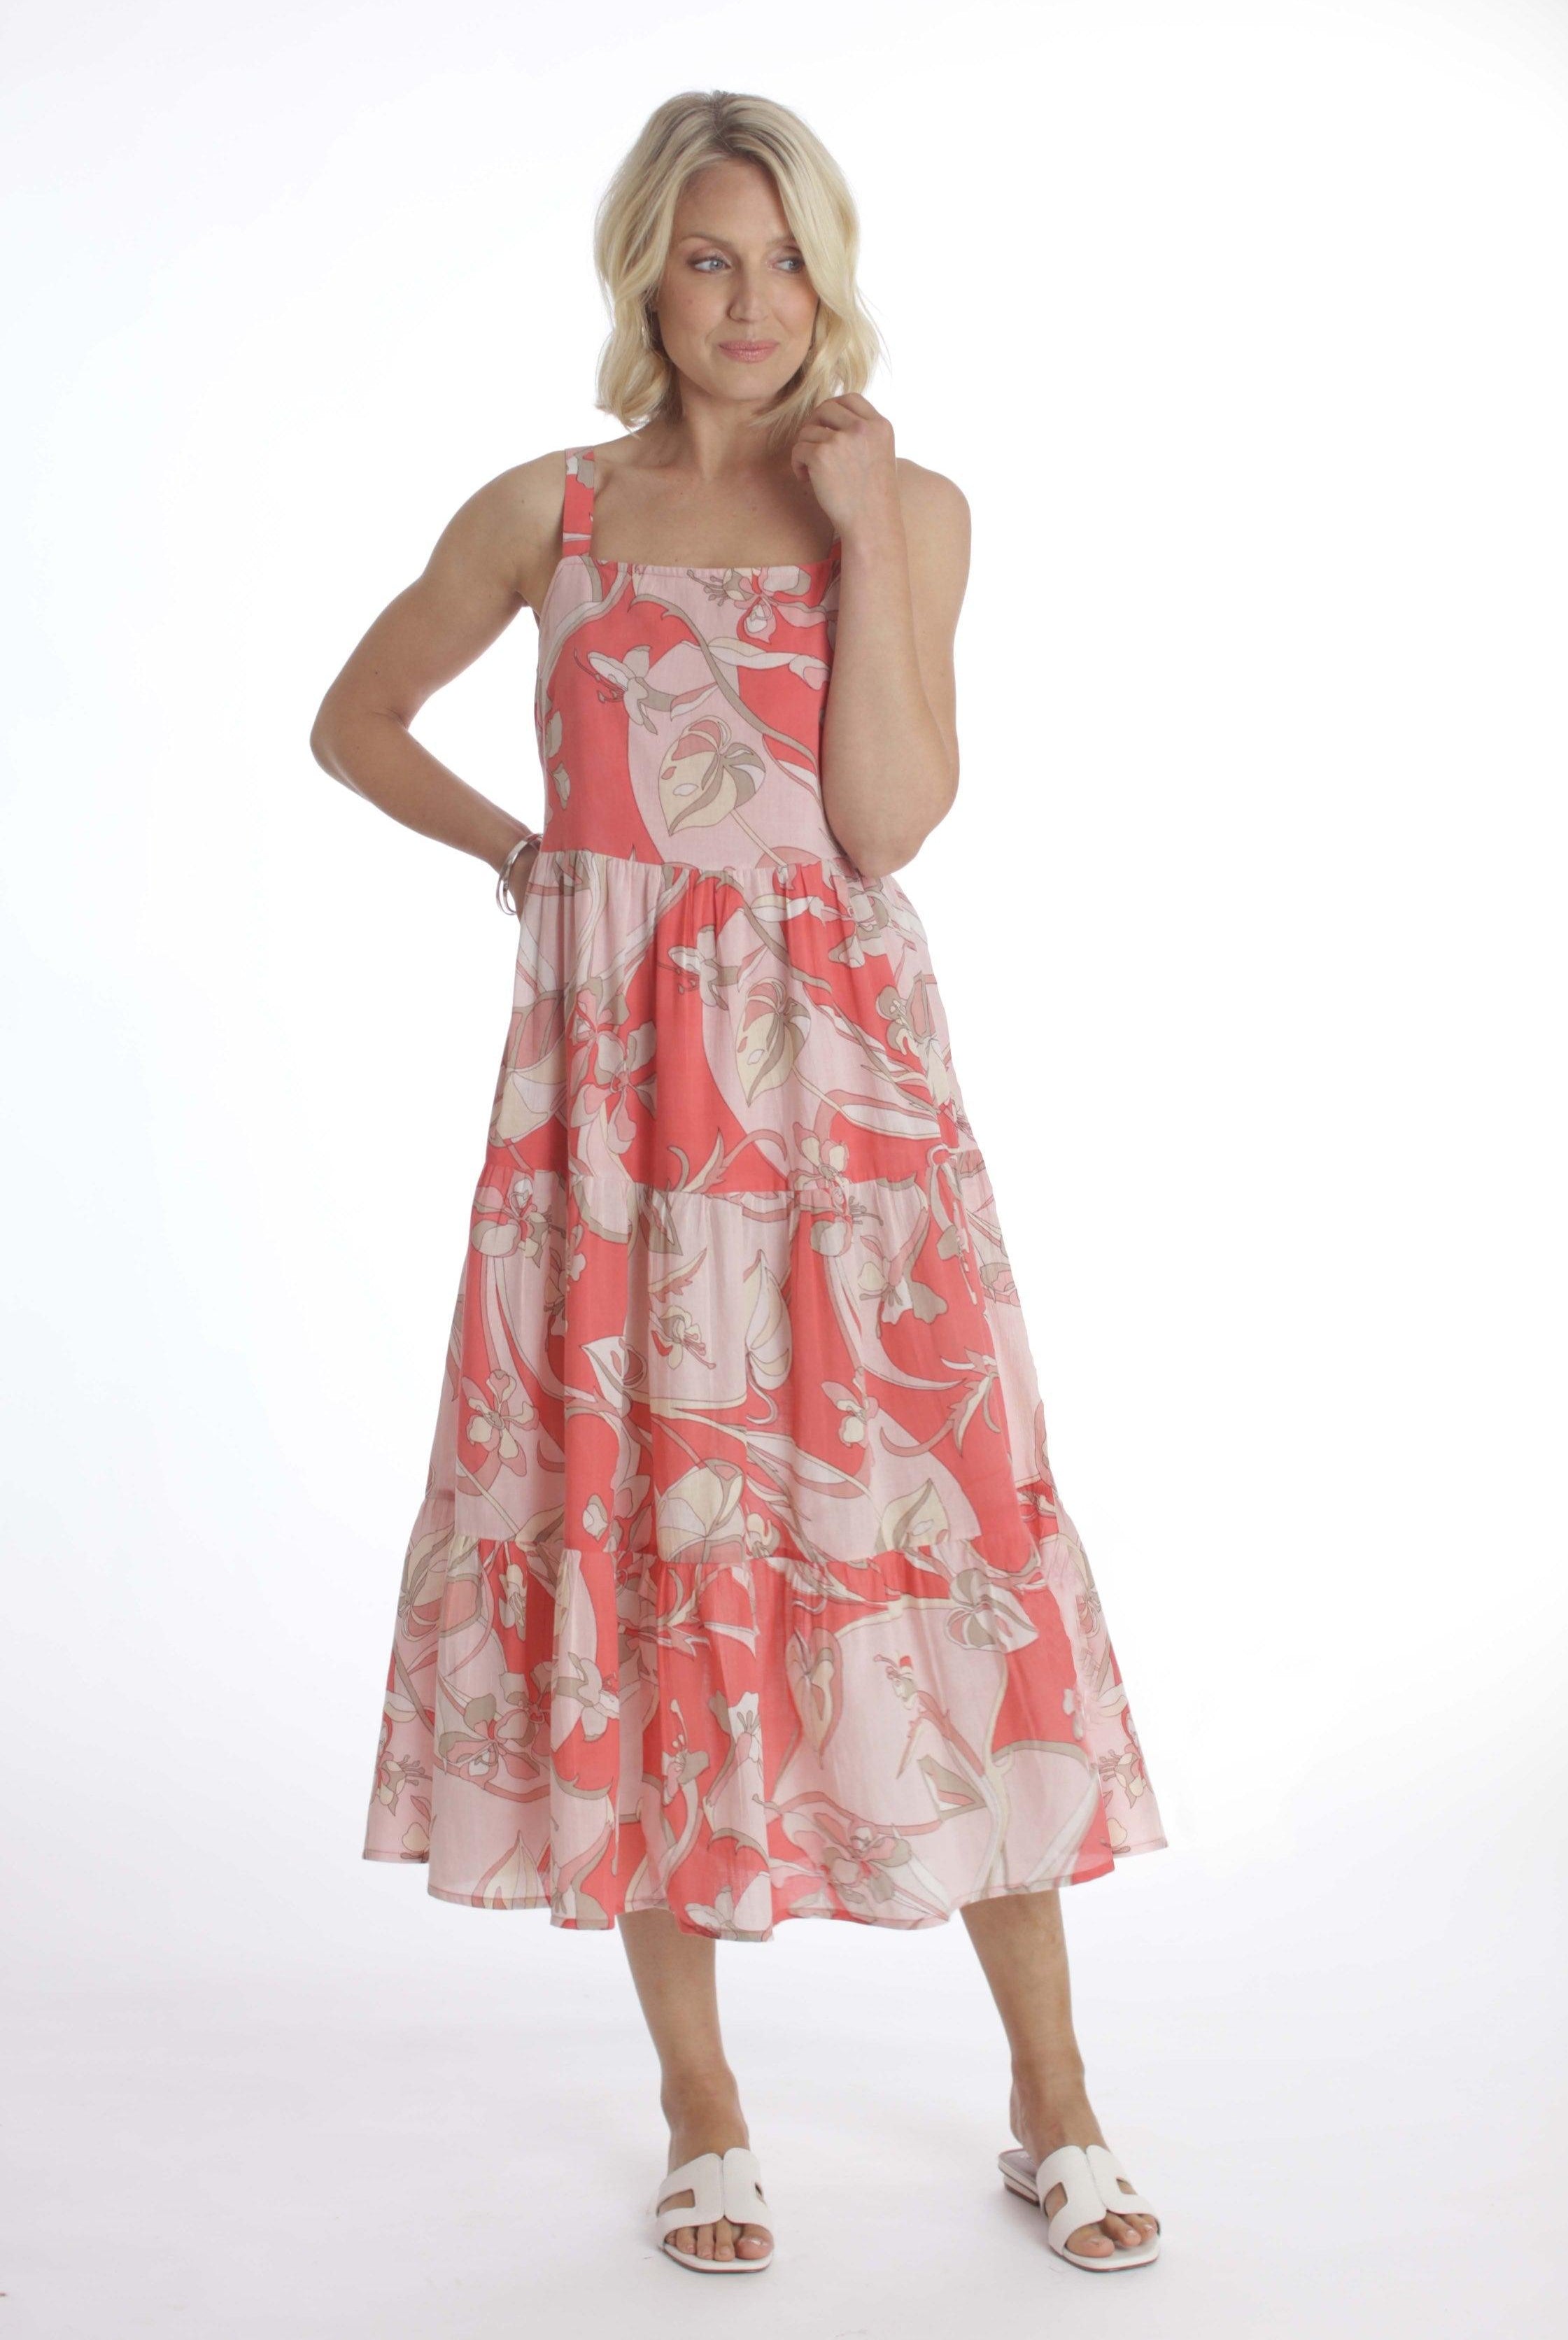 POMODORO Sun Dress 52210A - Solitaire Fashions Darwen